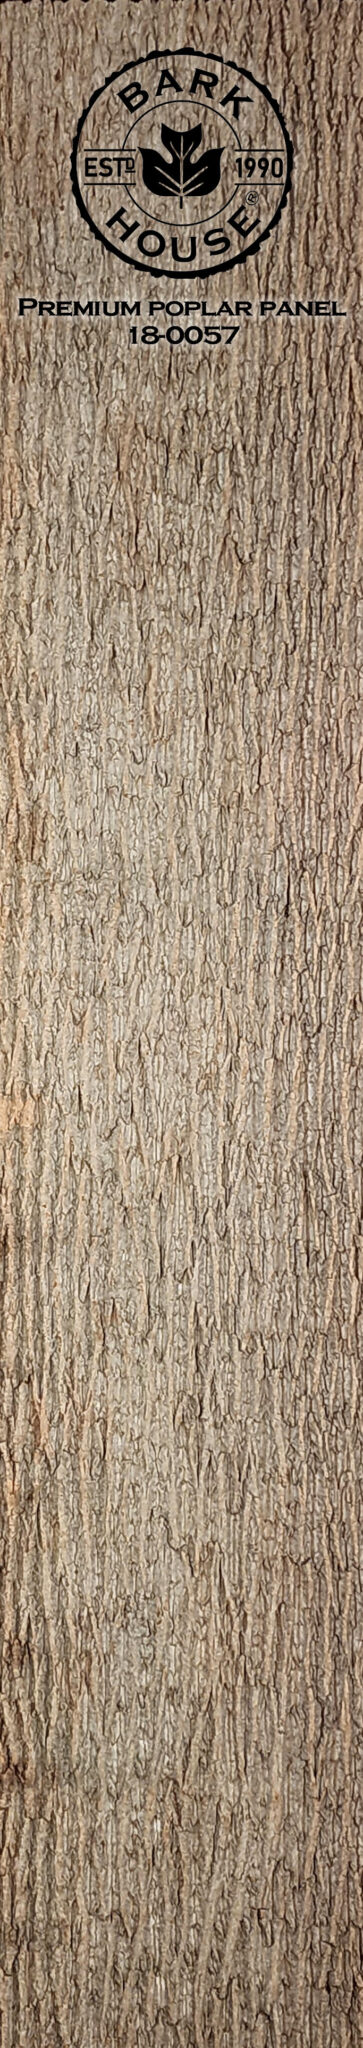 Bark House poplar bark panel SKU POPP-PRE-18-0057